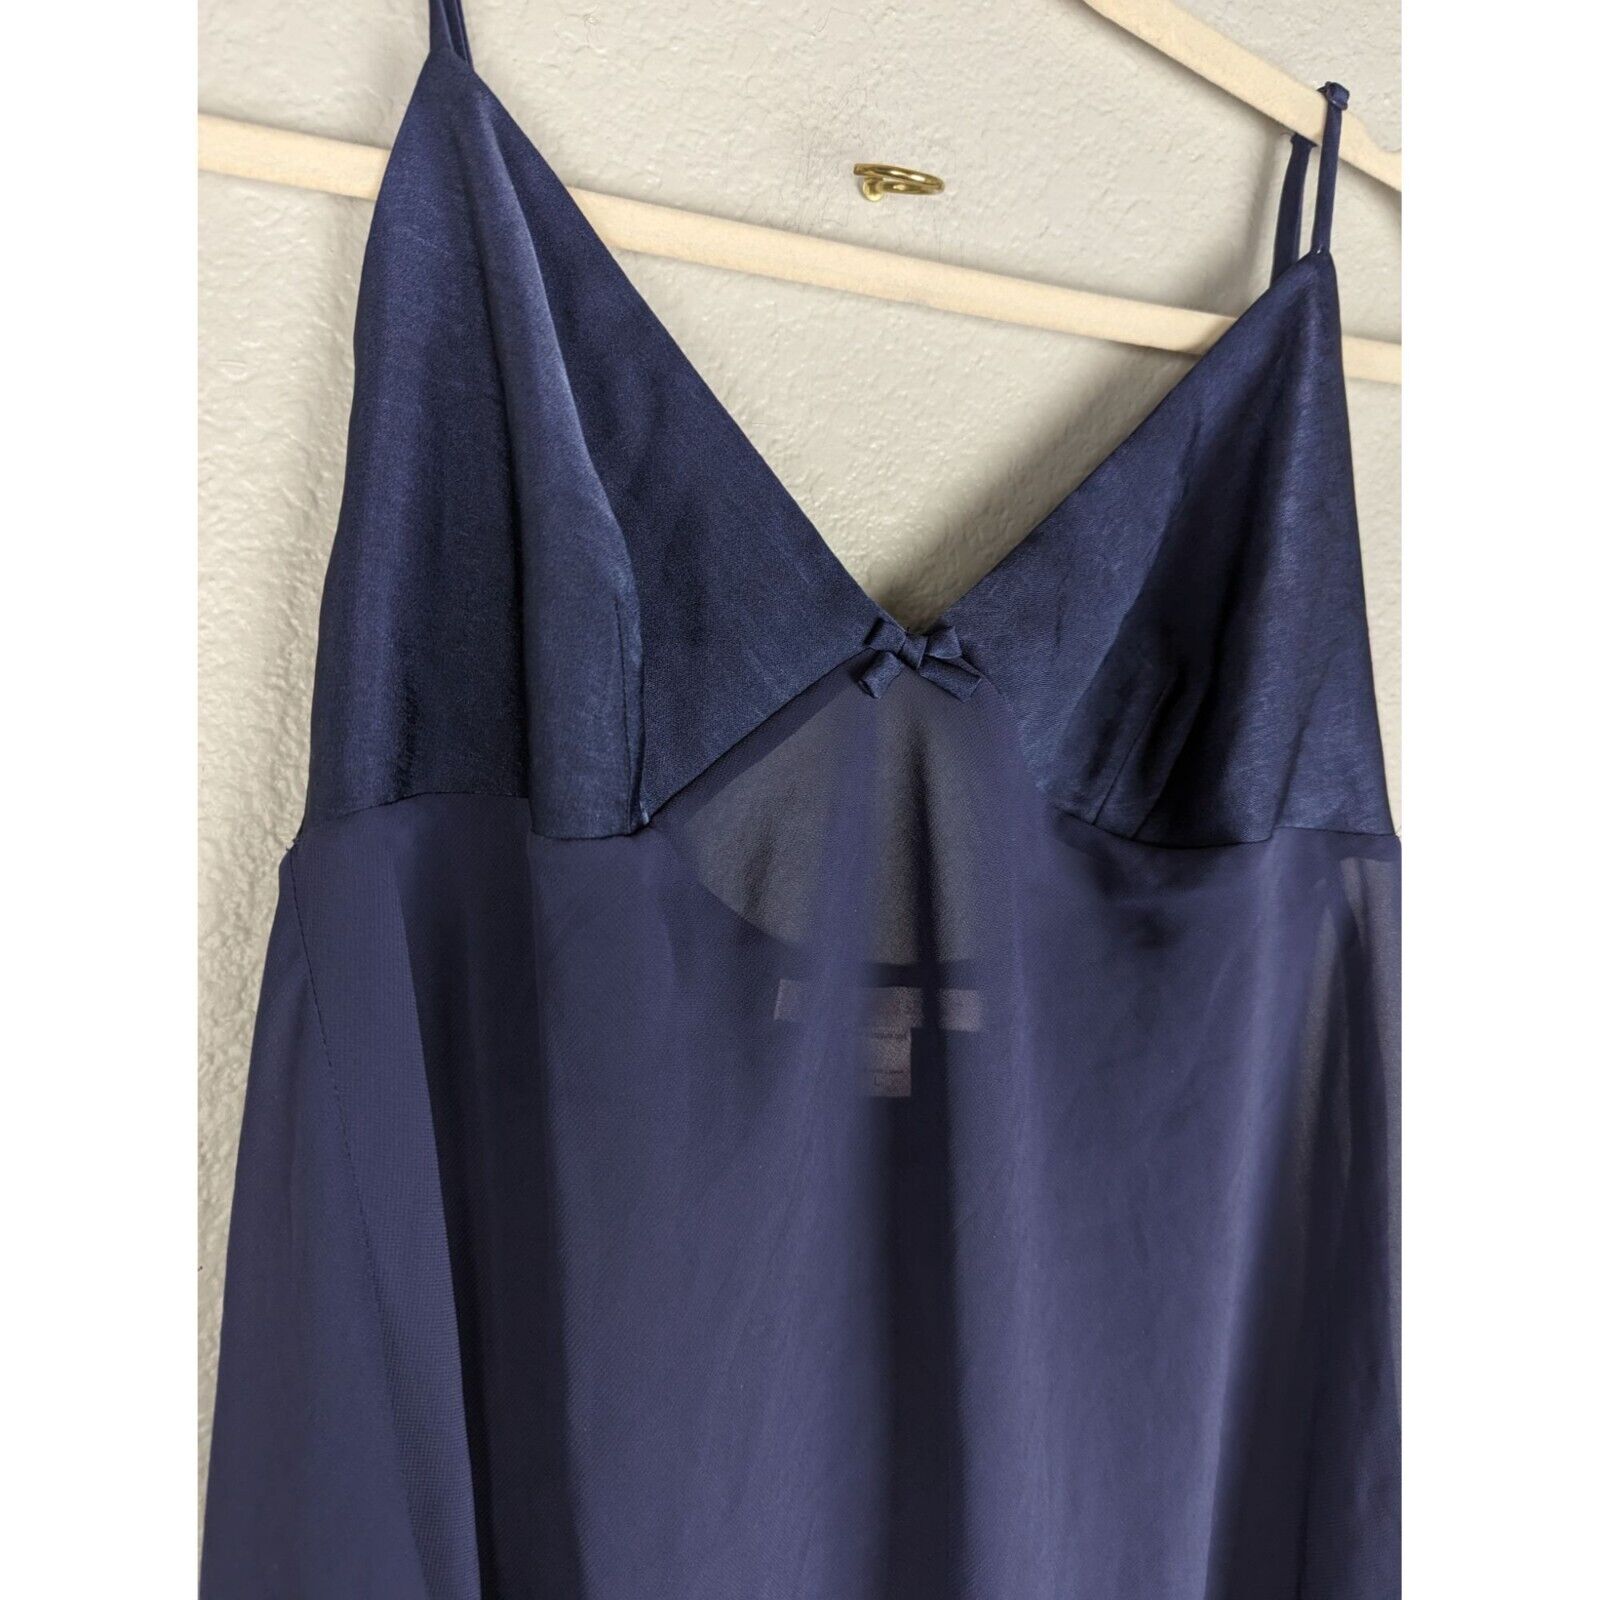 Victoria's Secret Lingerie Navy Blue Slip Dress B… - image 3